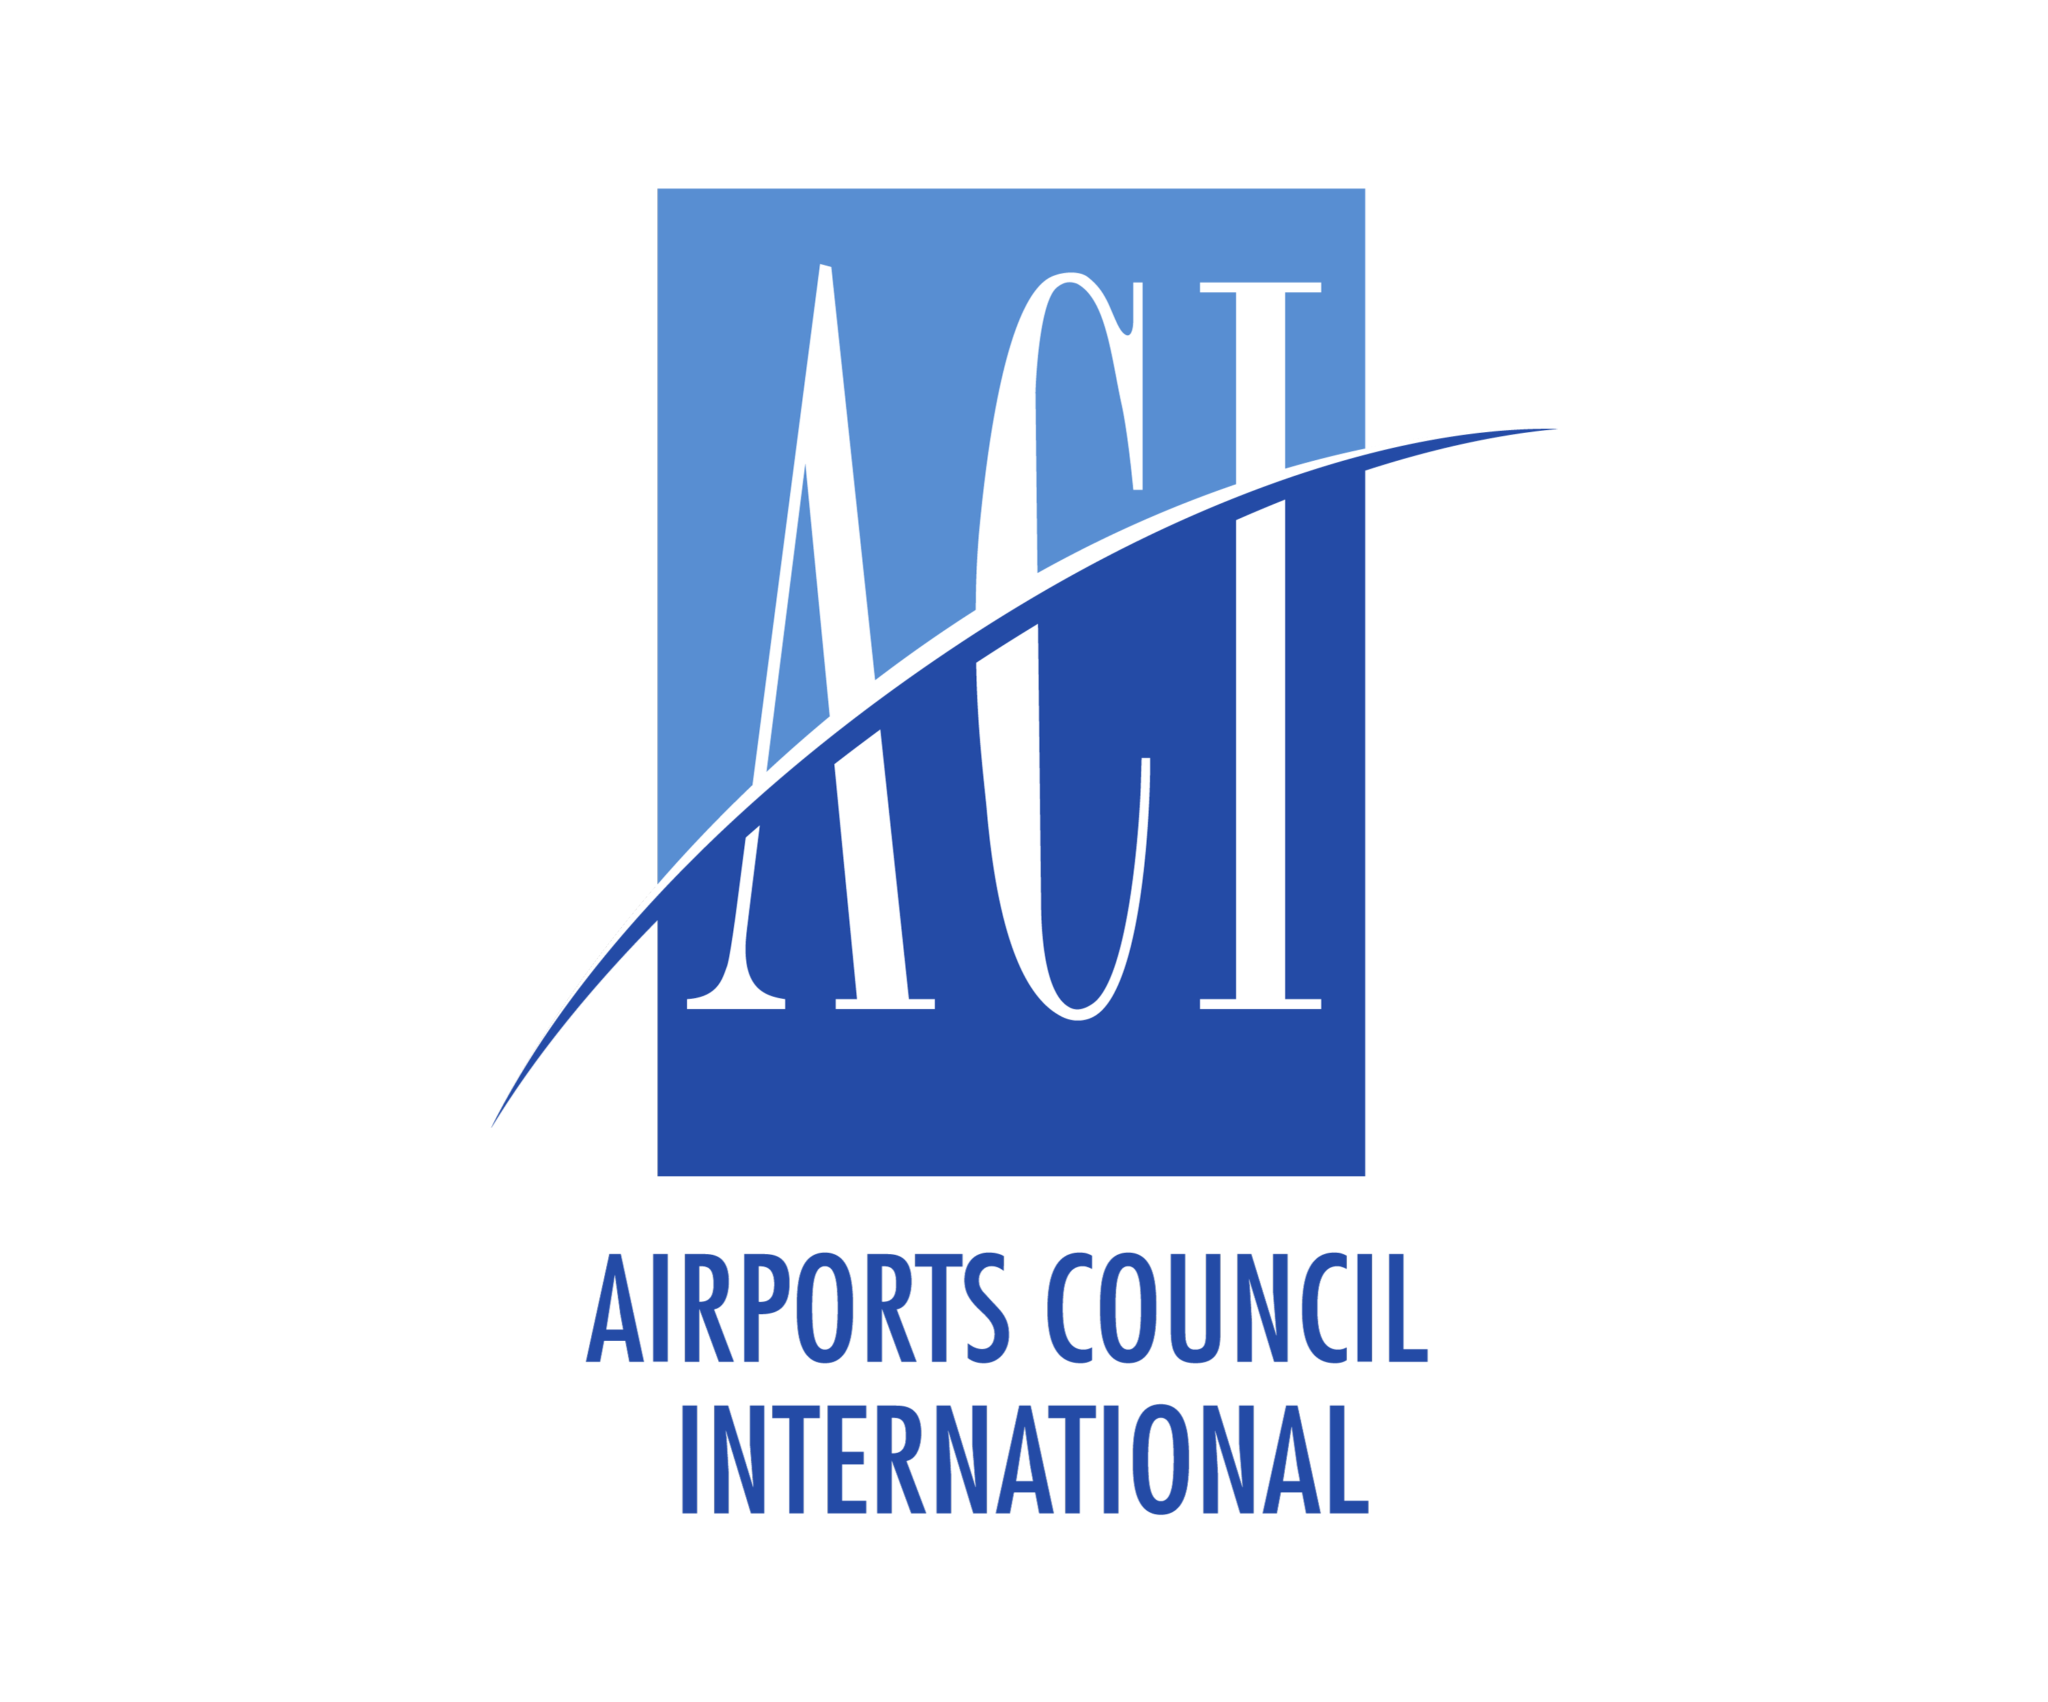 Download ACI Airports Council International Logo PNG and Vector (PDF